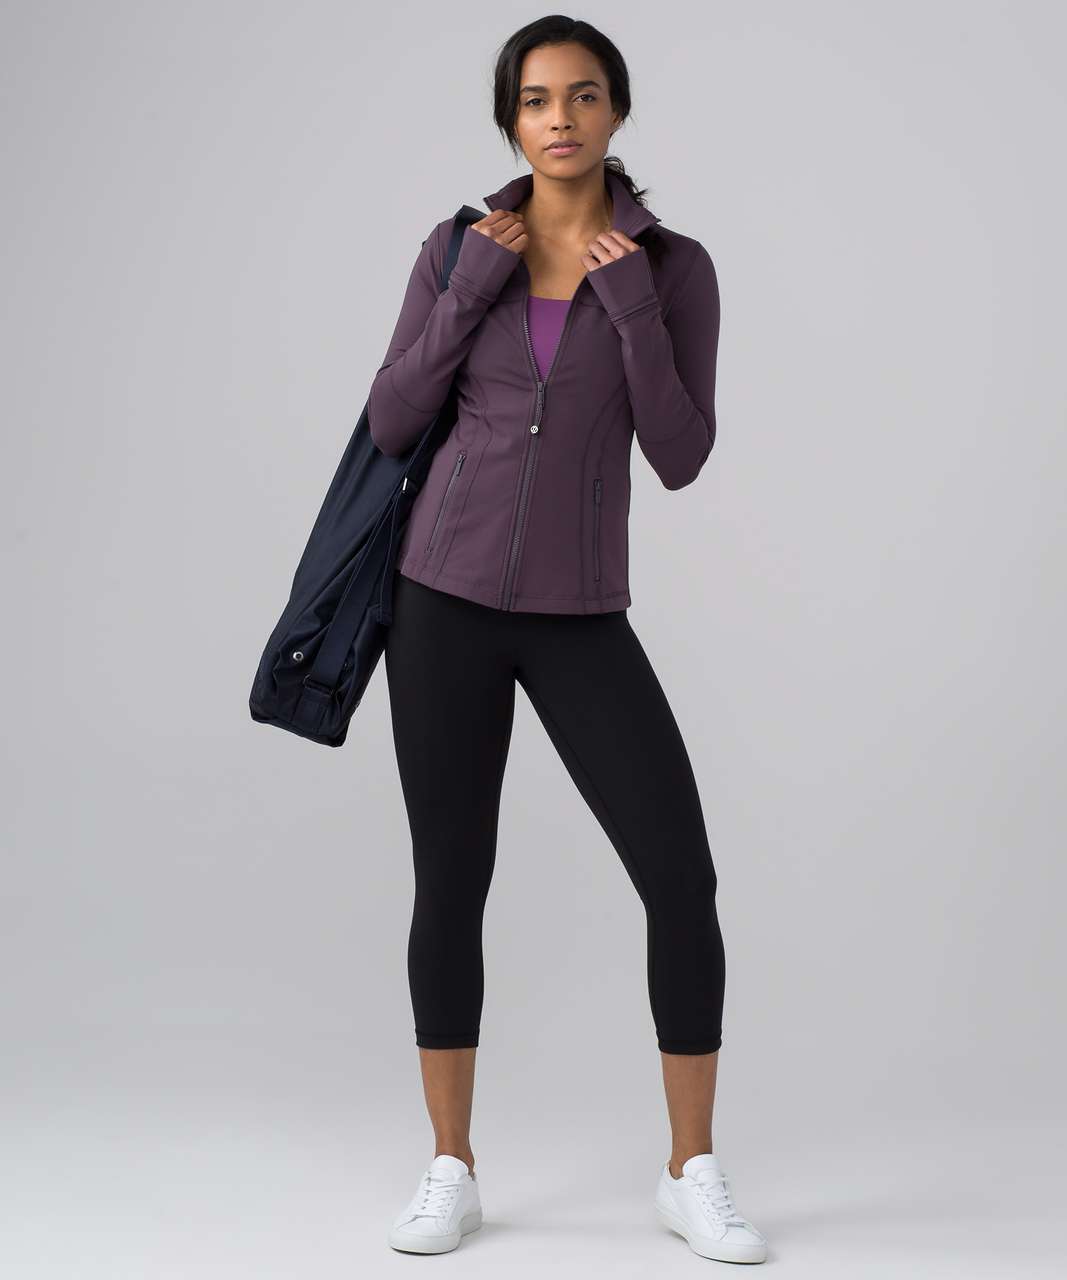 Lululemon Athletica Define Jacket Purple Black Currant Luon size 8 womens